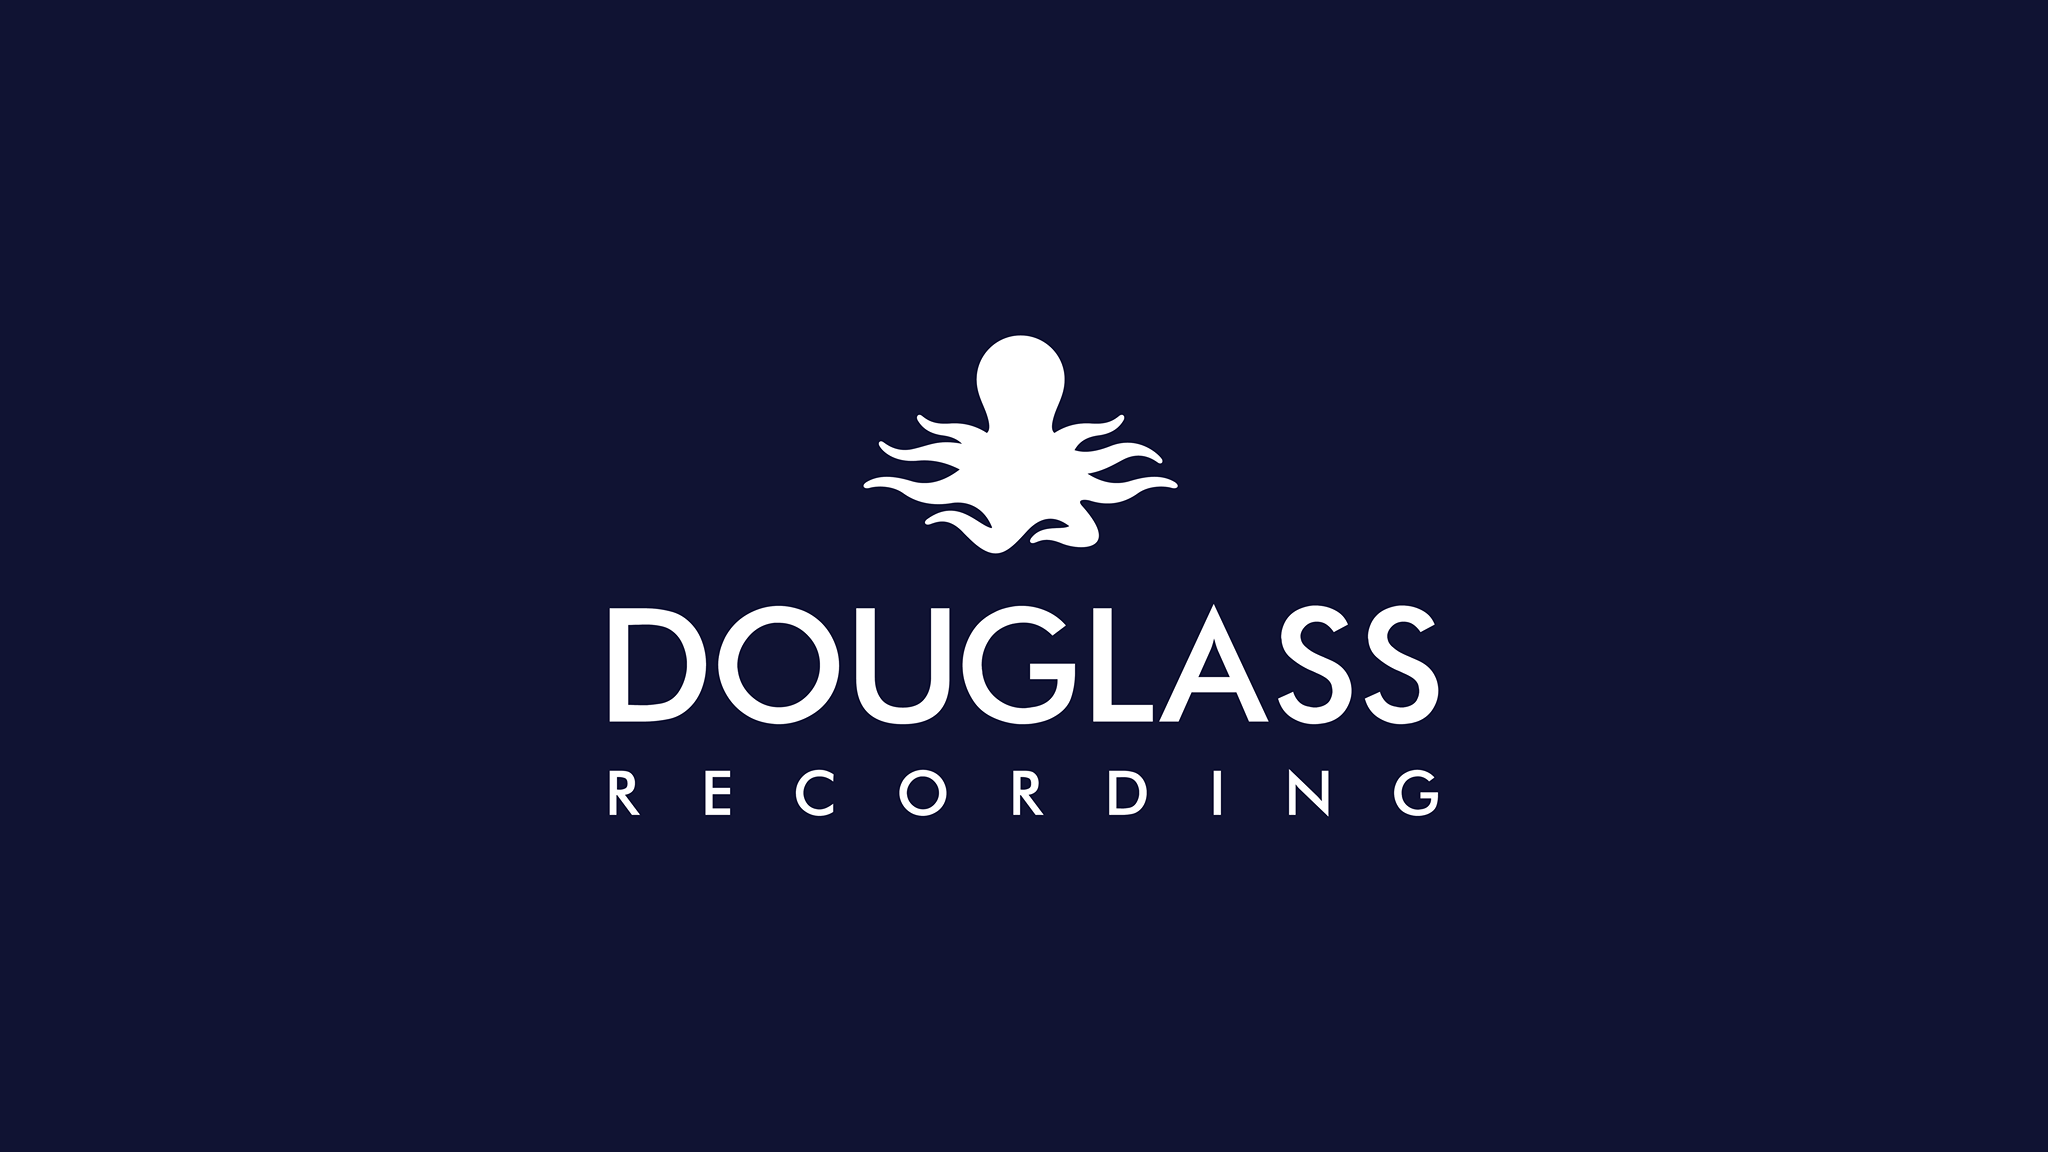 Douglass Recording